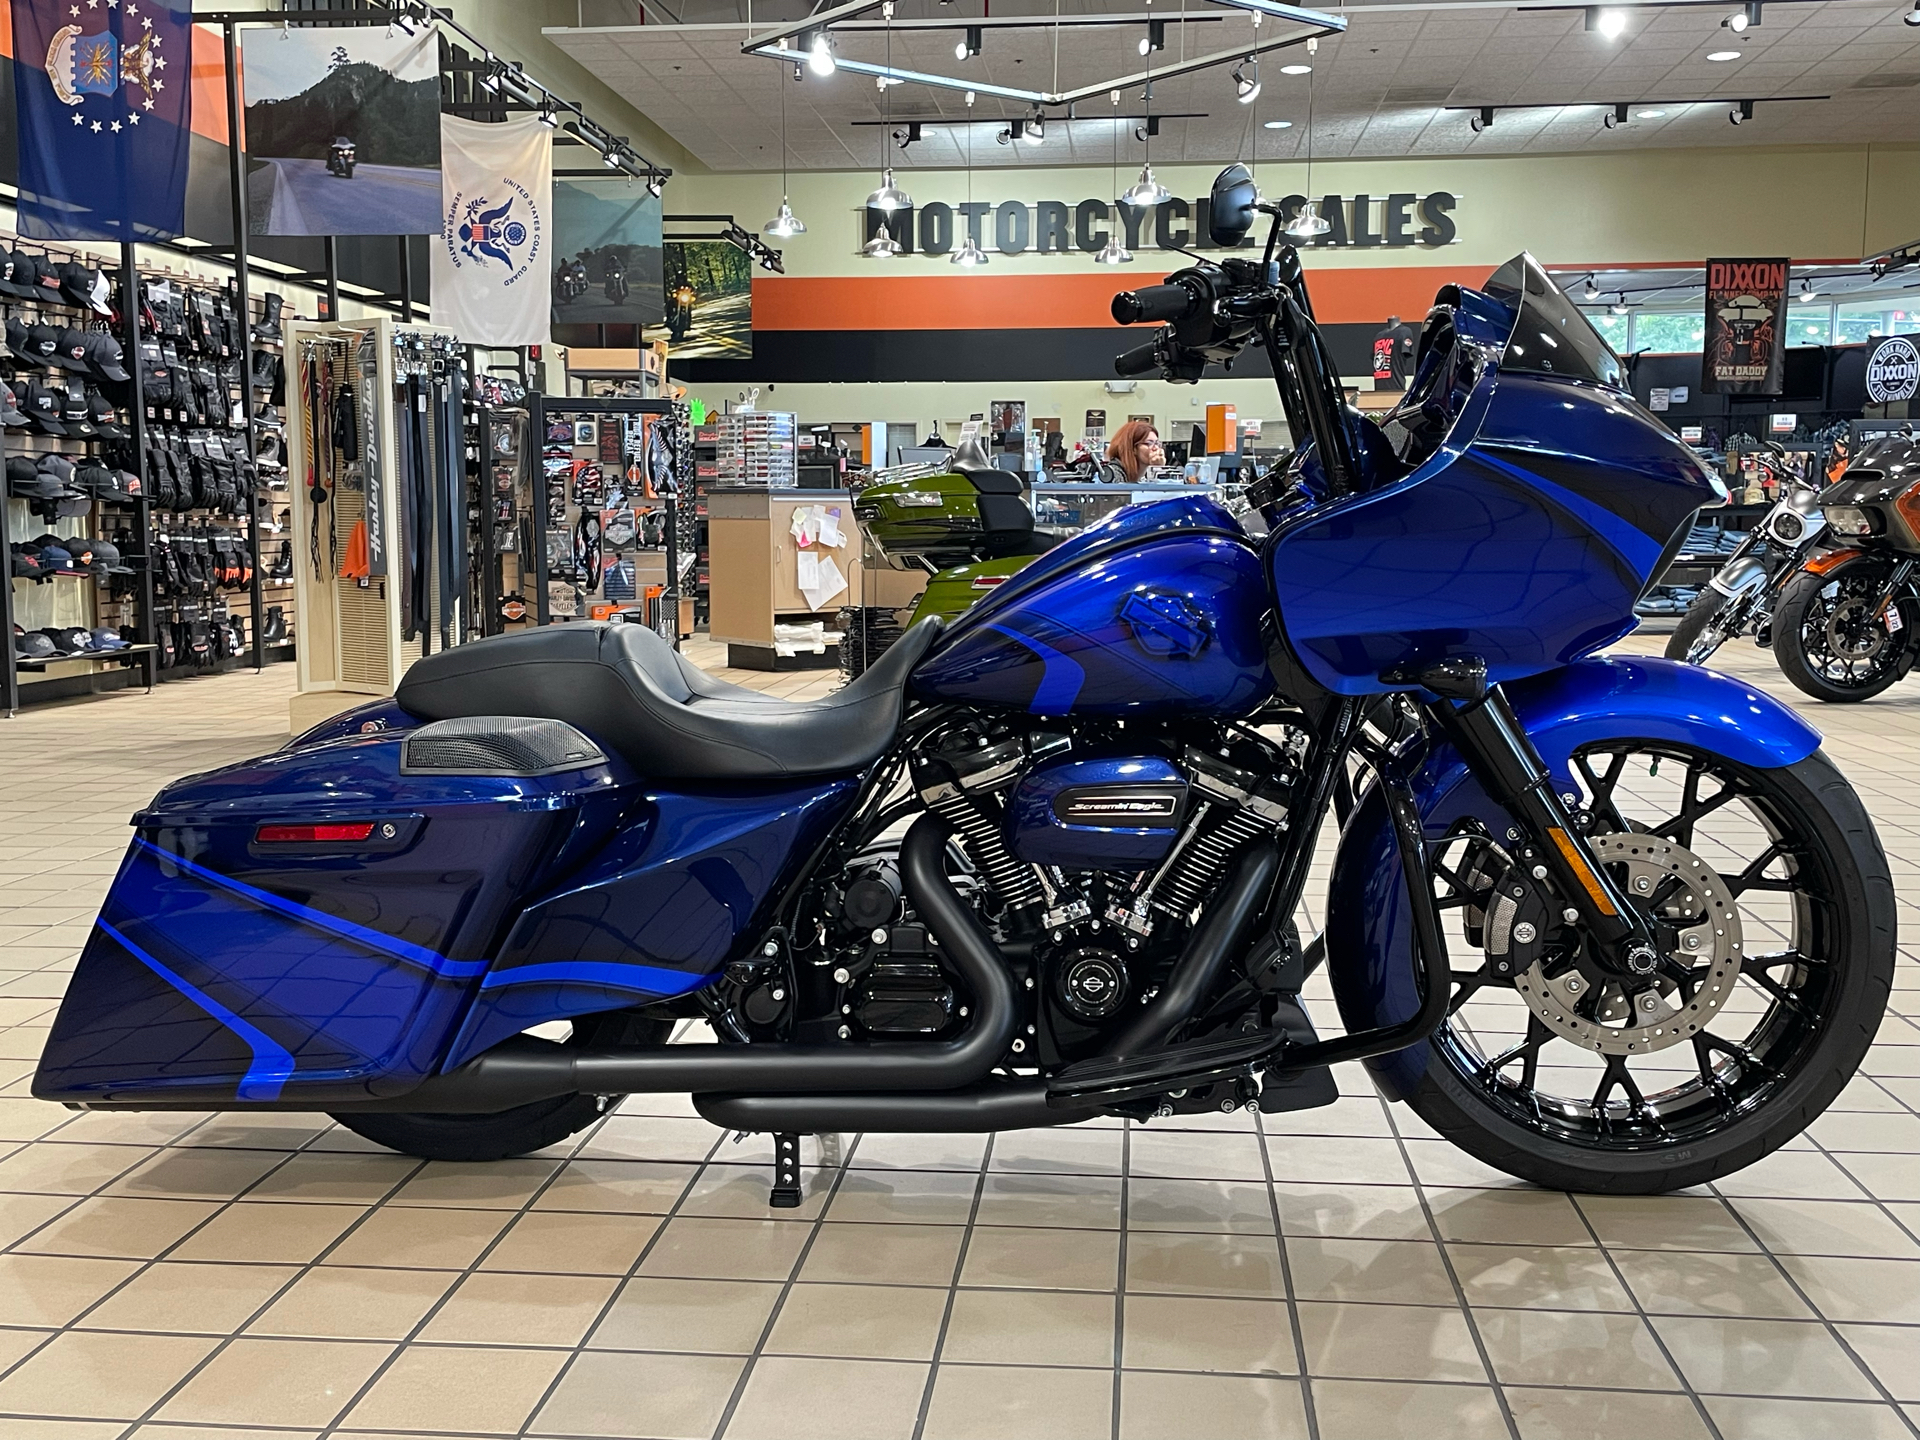 Used 2020 Harley Davidson Road Glide Special Quantico Custom Designs 1 Of 1 My Boy Blue Motorcycles In Orange Va 658204